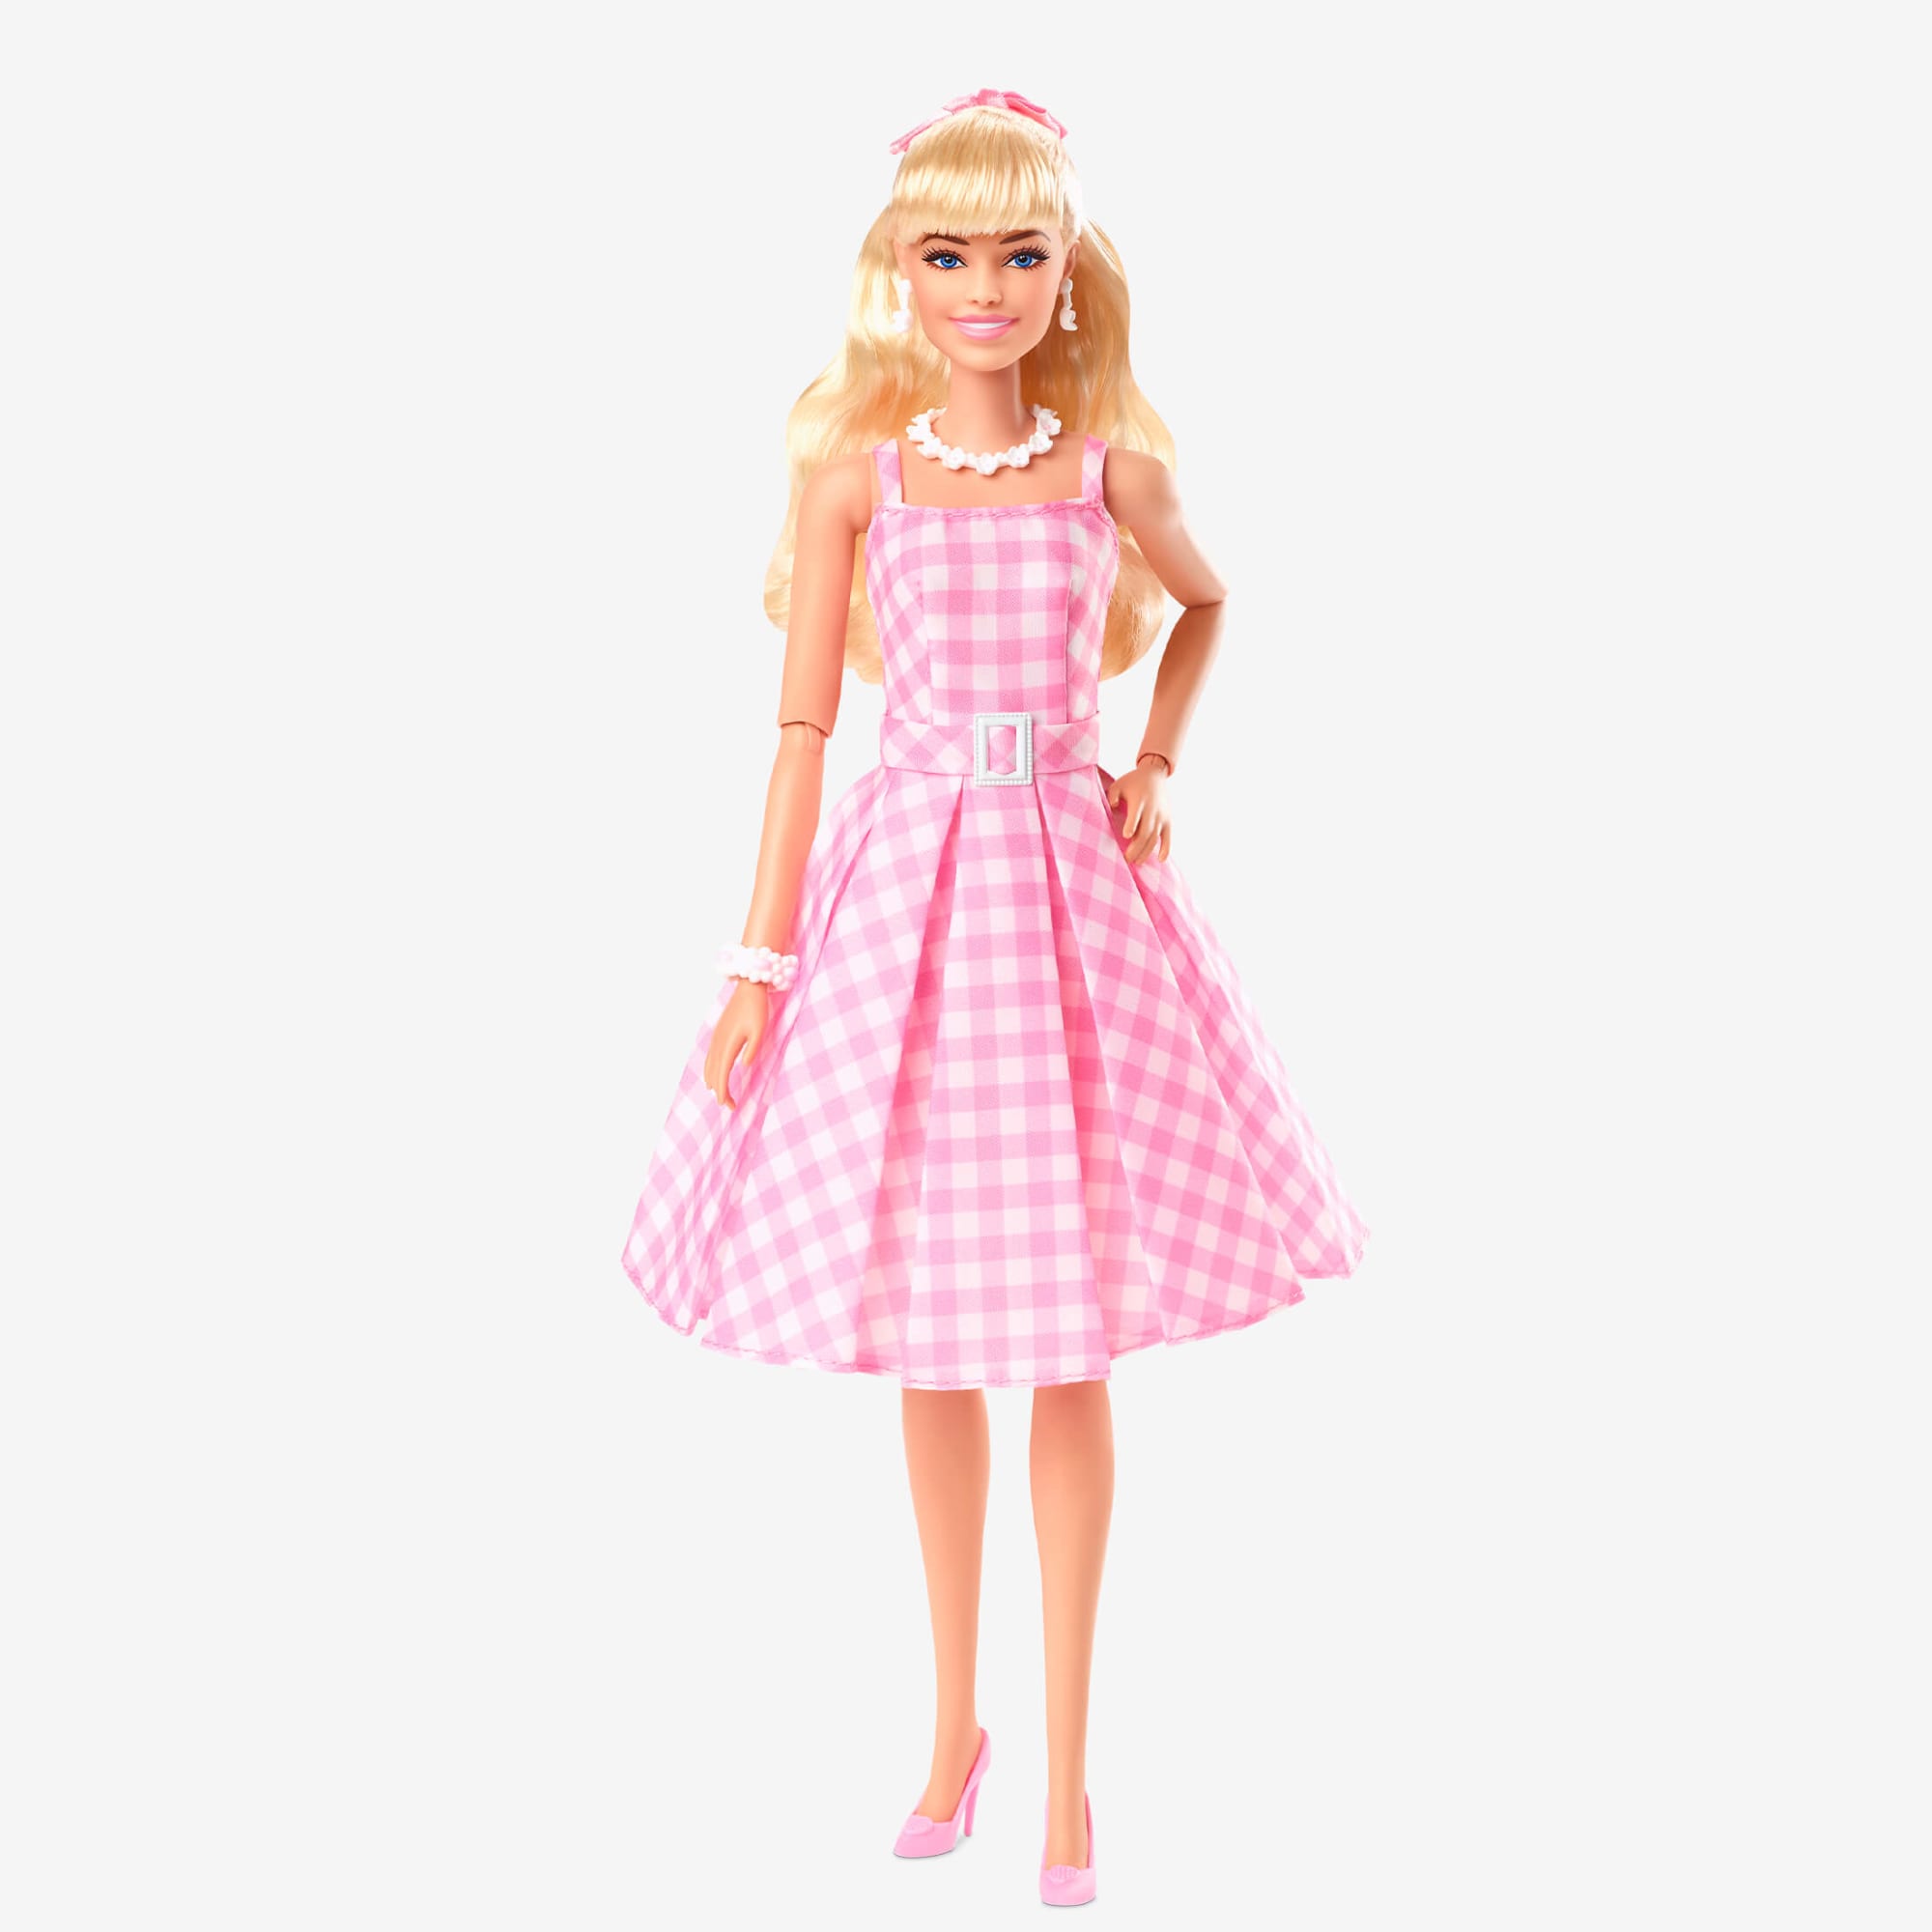 dress of barbie